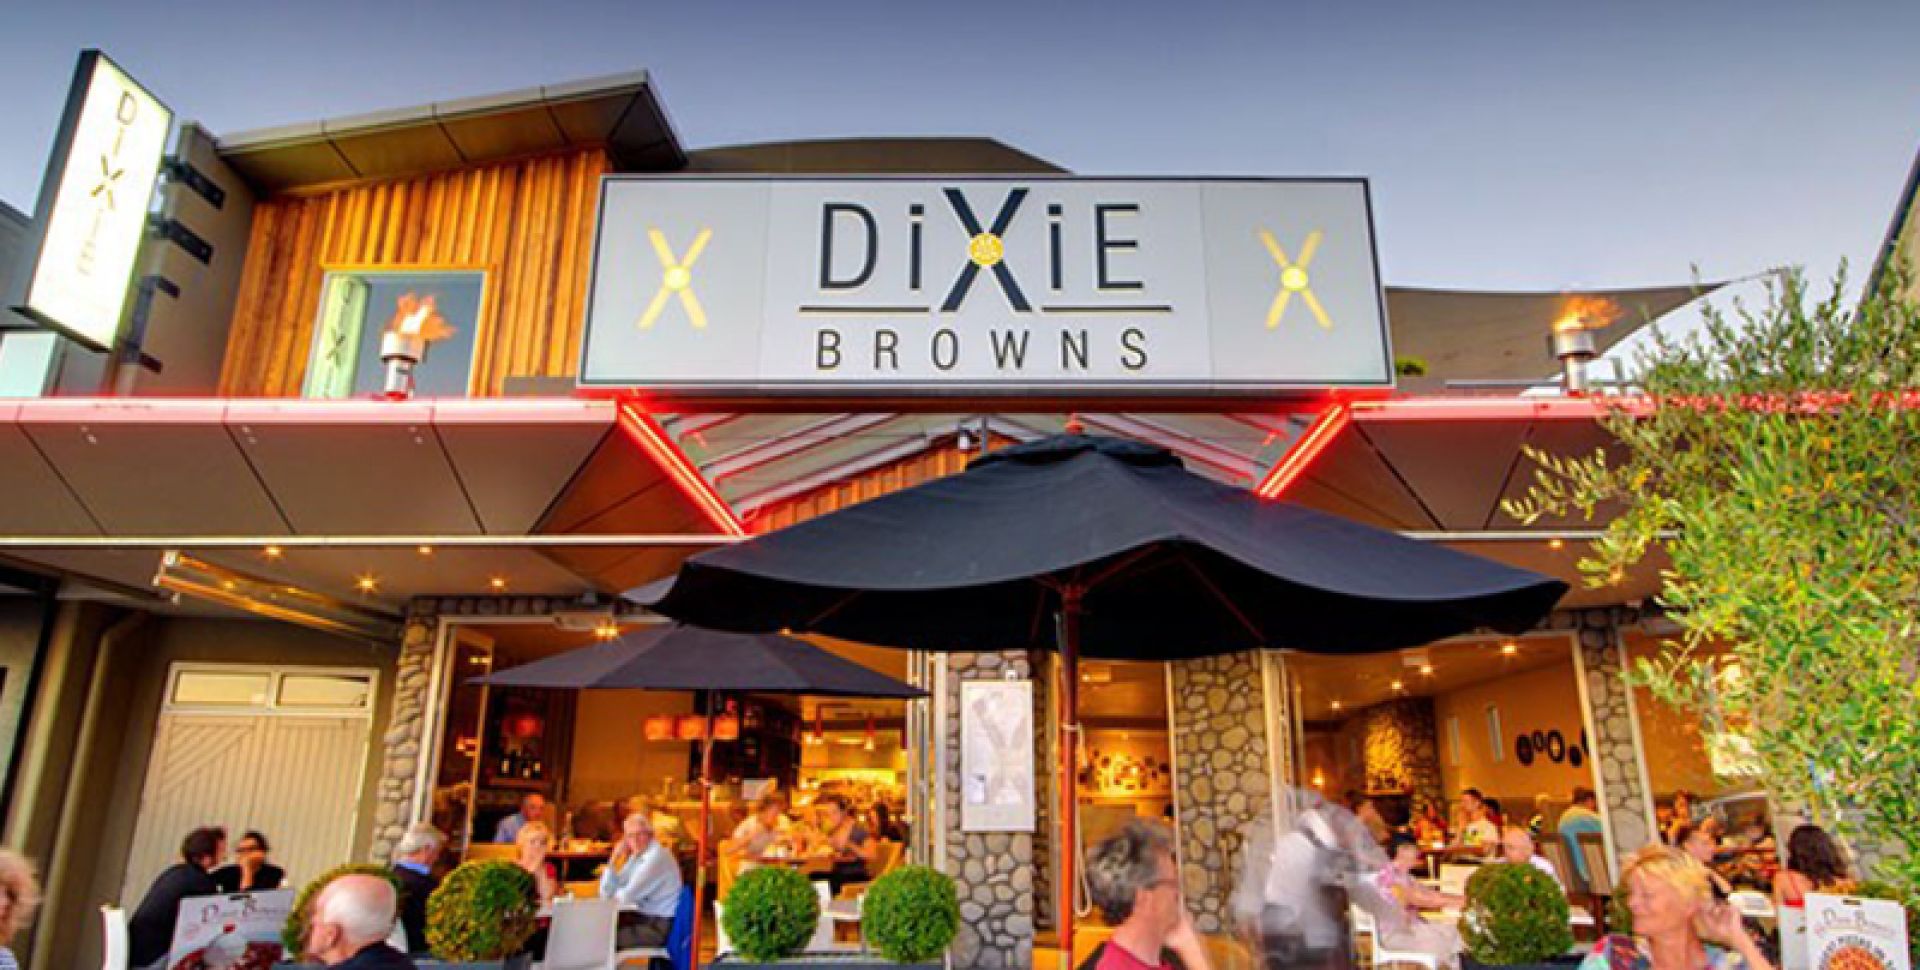 Dixie browns taupo restaurant